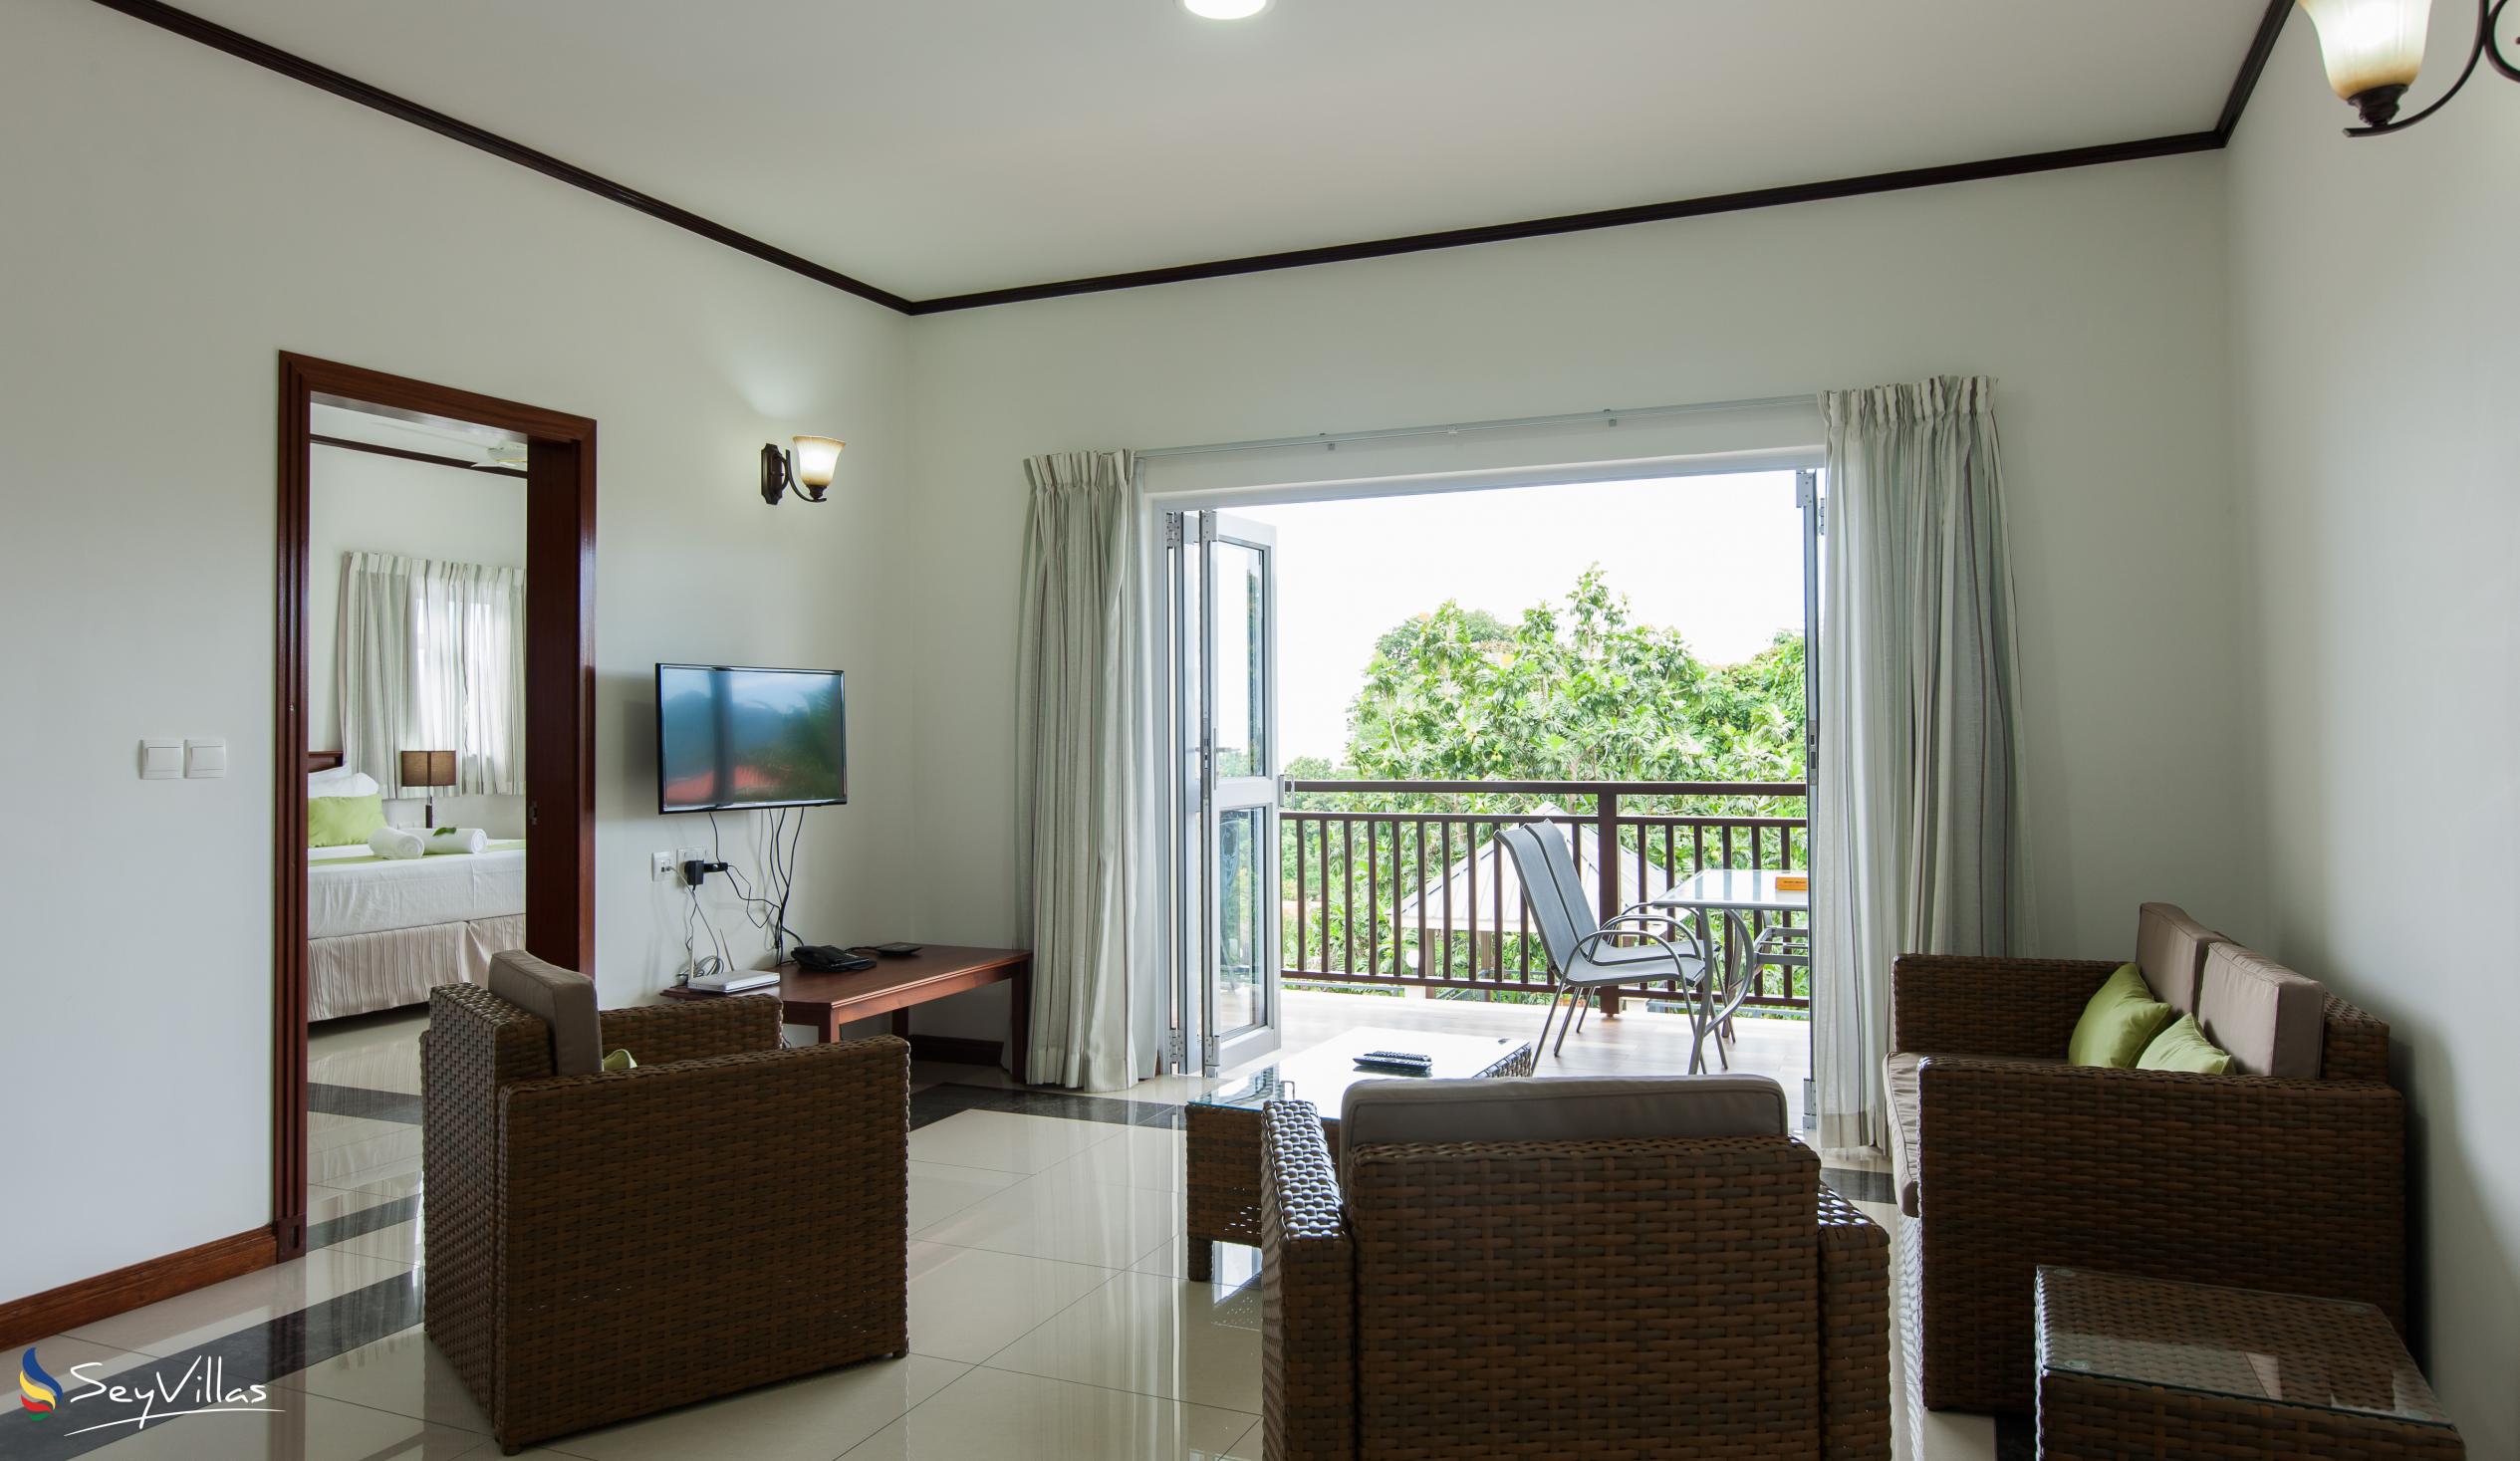 Foto 58: Bambous River Lodge - Appartement mit 2 Schlafzimmern - Mahé (Seychellen)